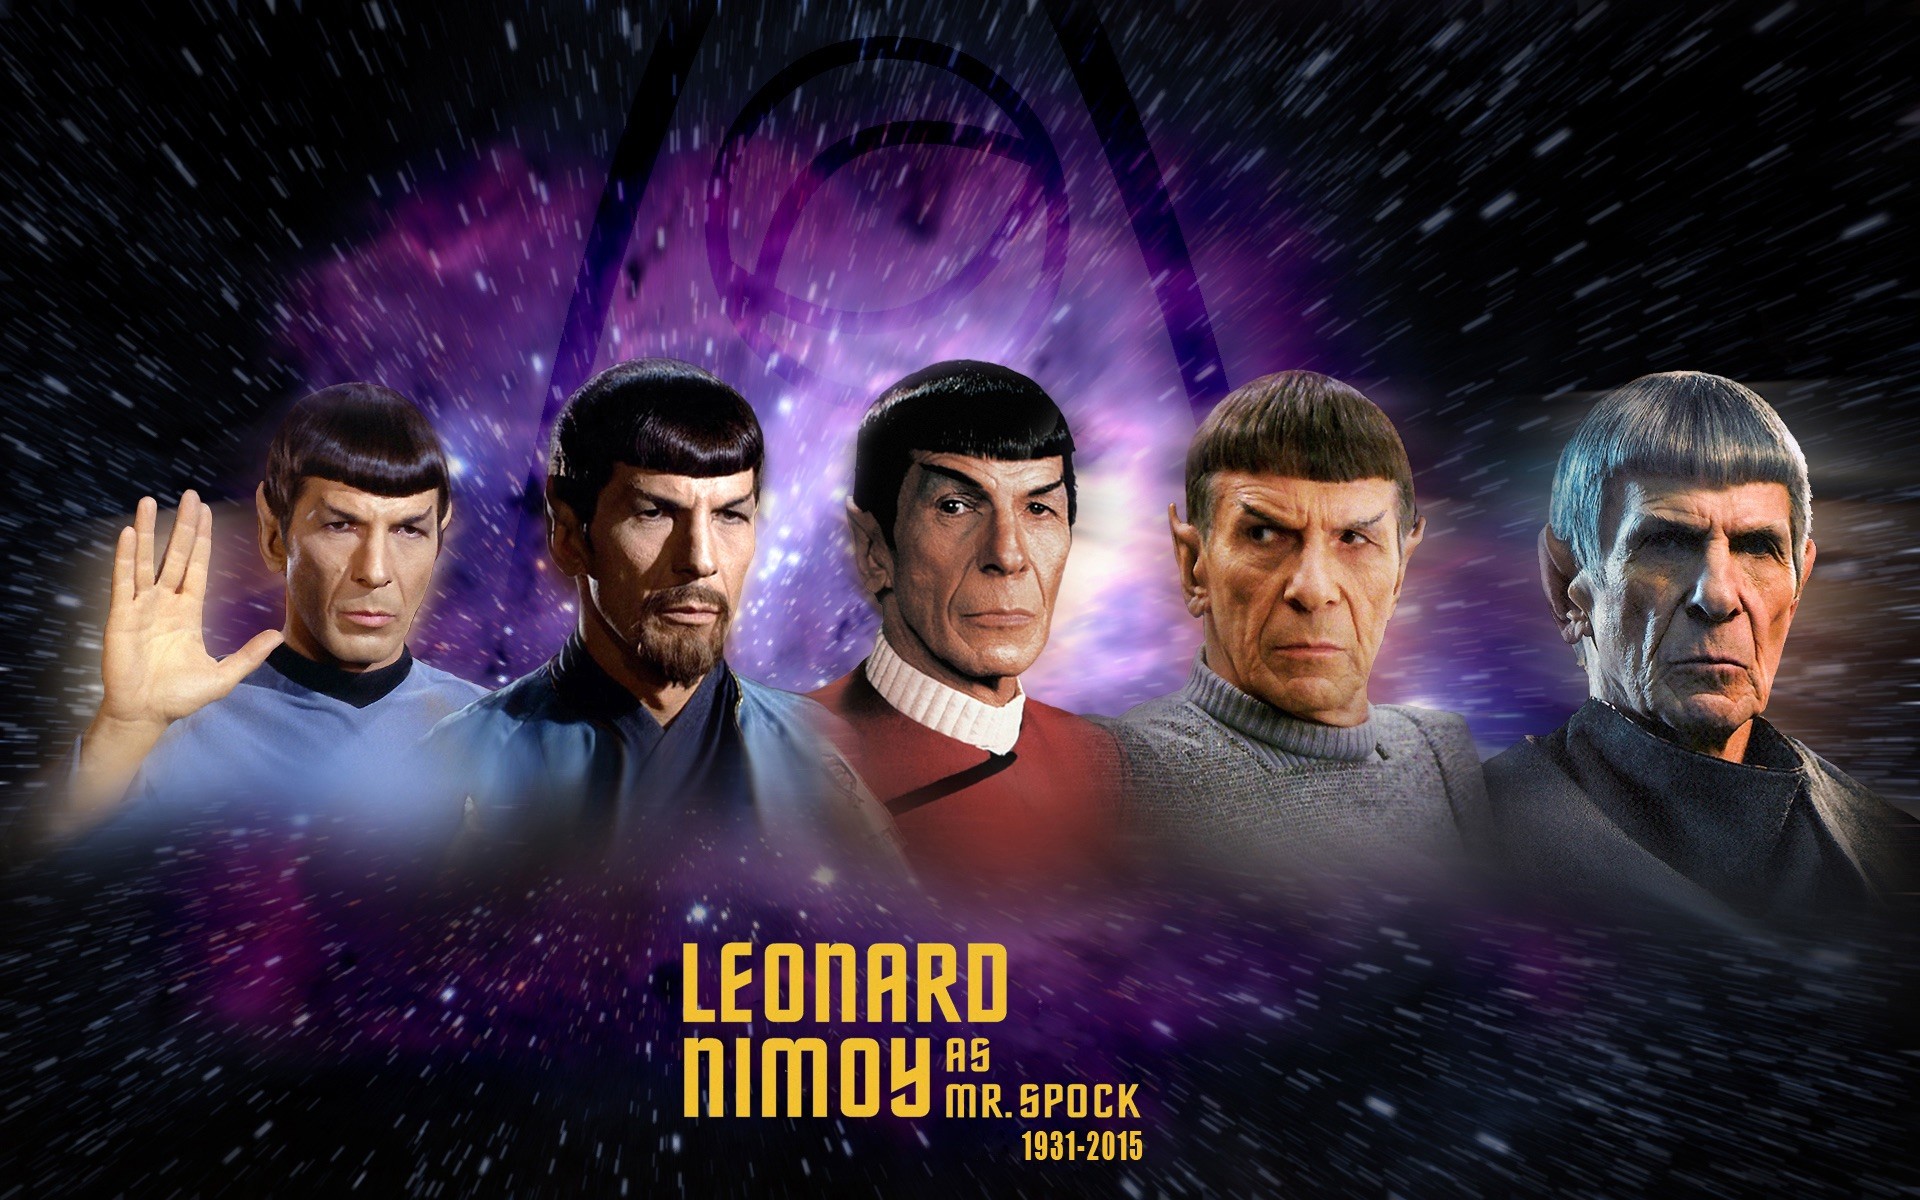 1920x1200 Star Trek Leinard Nimoy Mr.Spock. Free Star Trek computer desktop wallpaper,  images